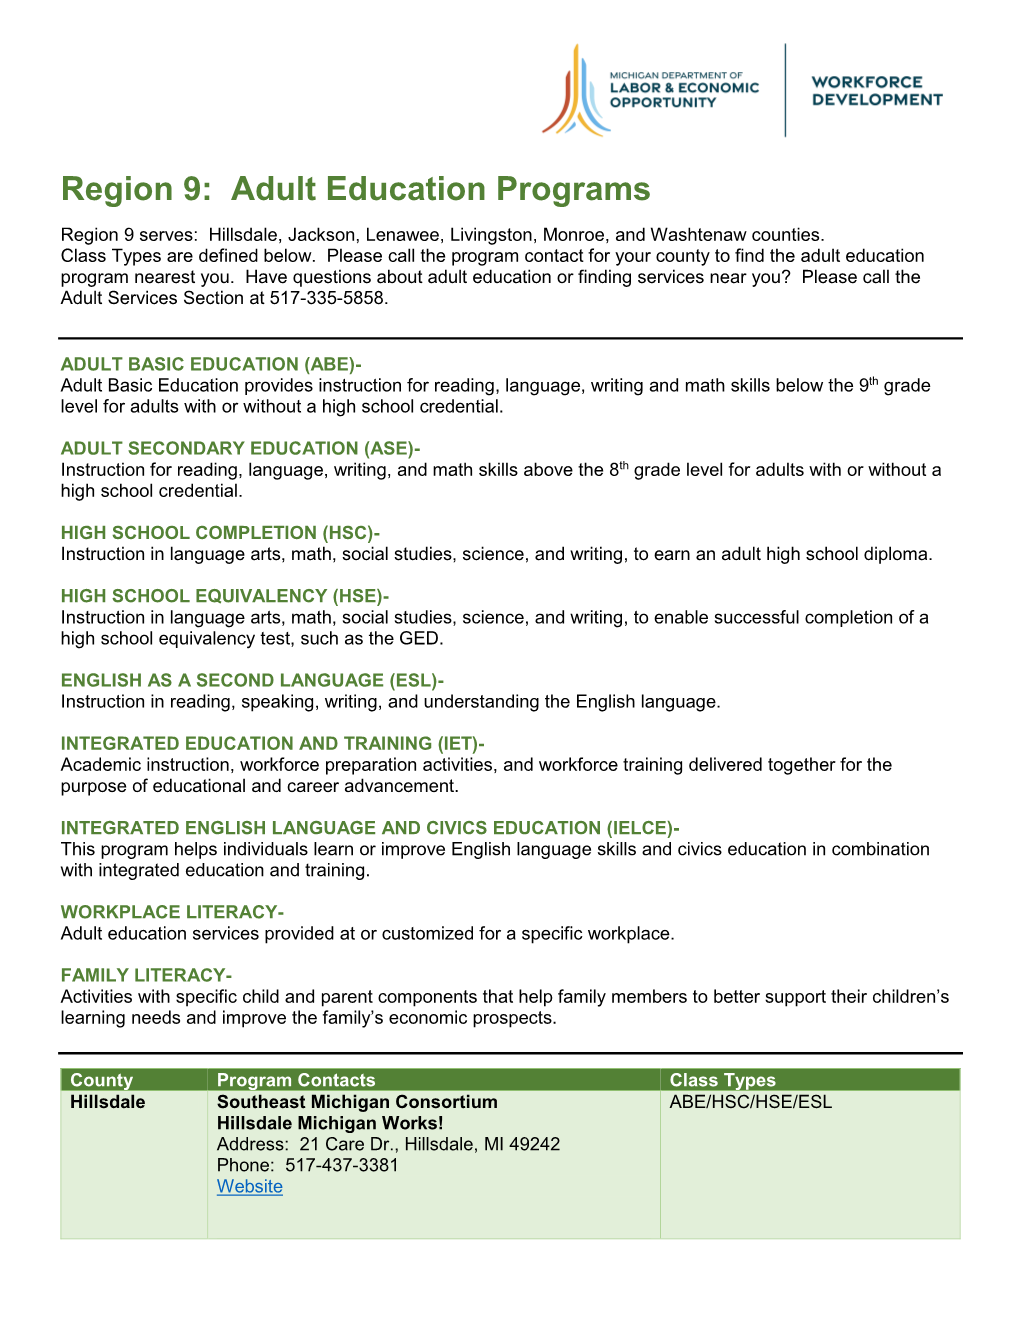 Region 9: Adult Education Programs Region 9 Serves: Hillsdale, Jackson, Lenawee, Livingston, Monroe, and Washtenaw Counties